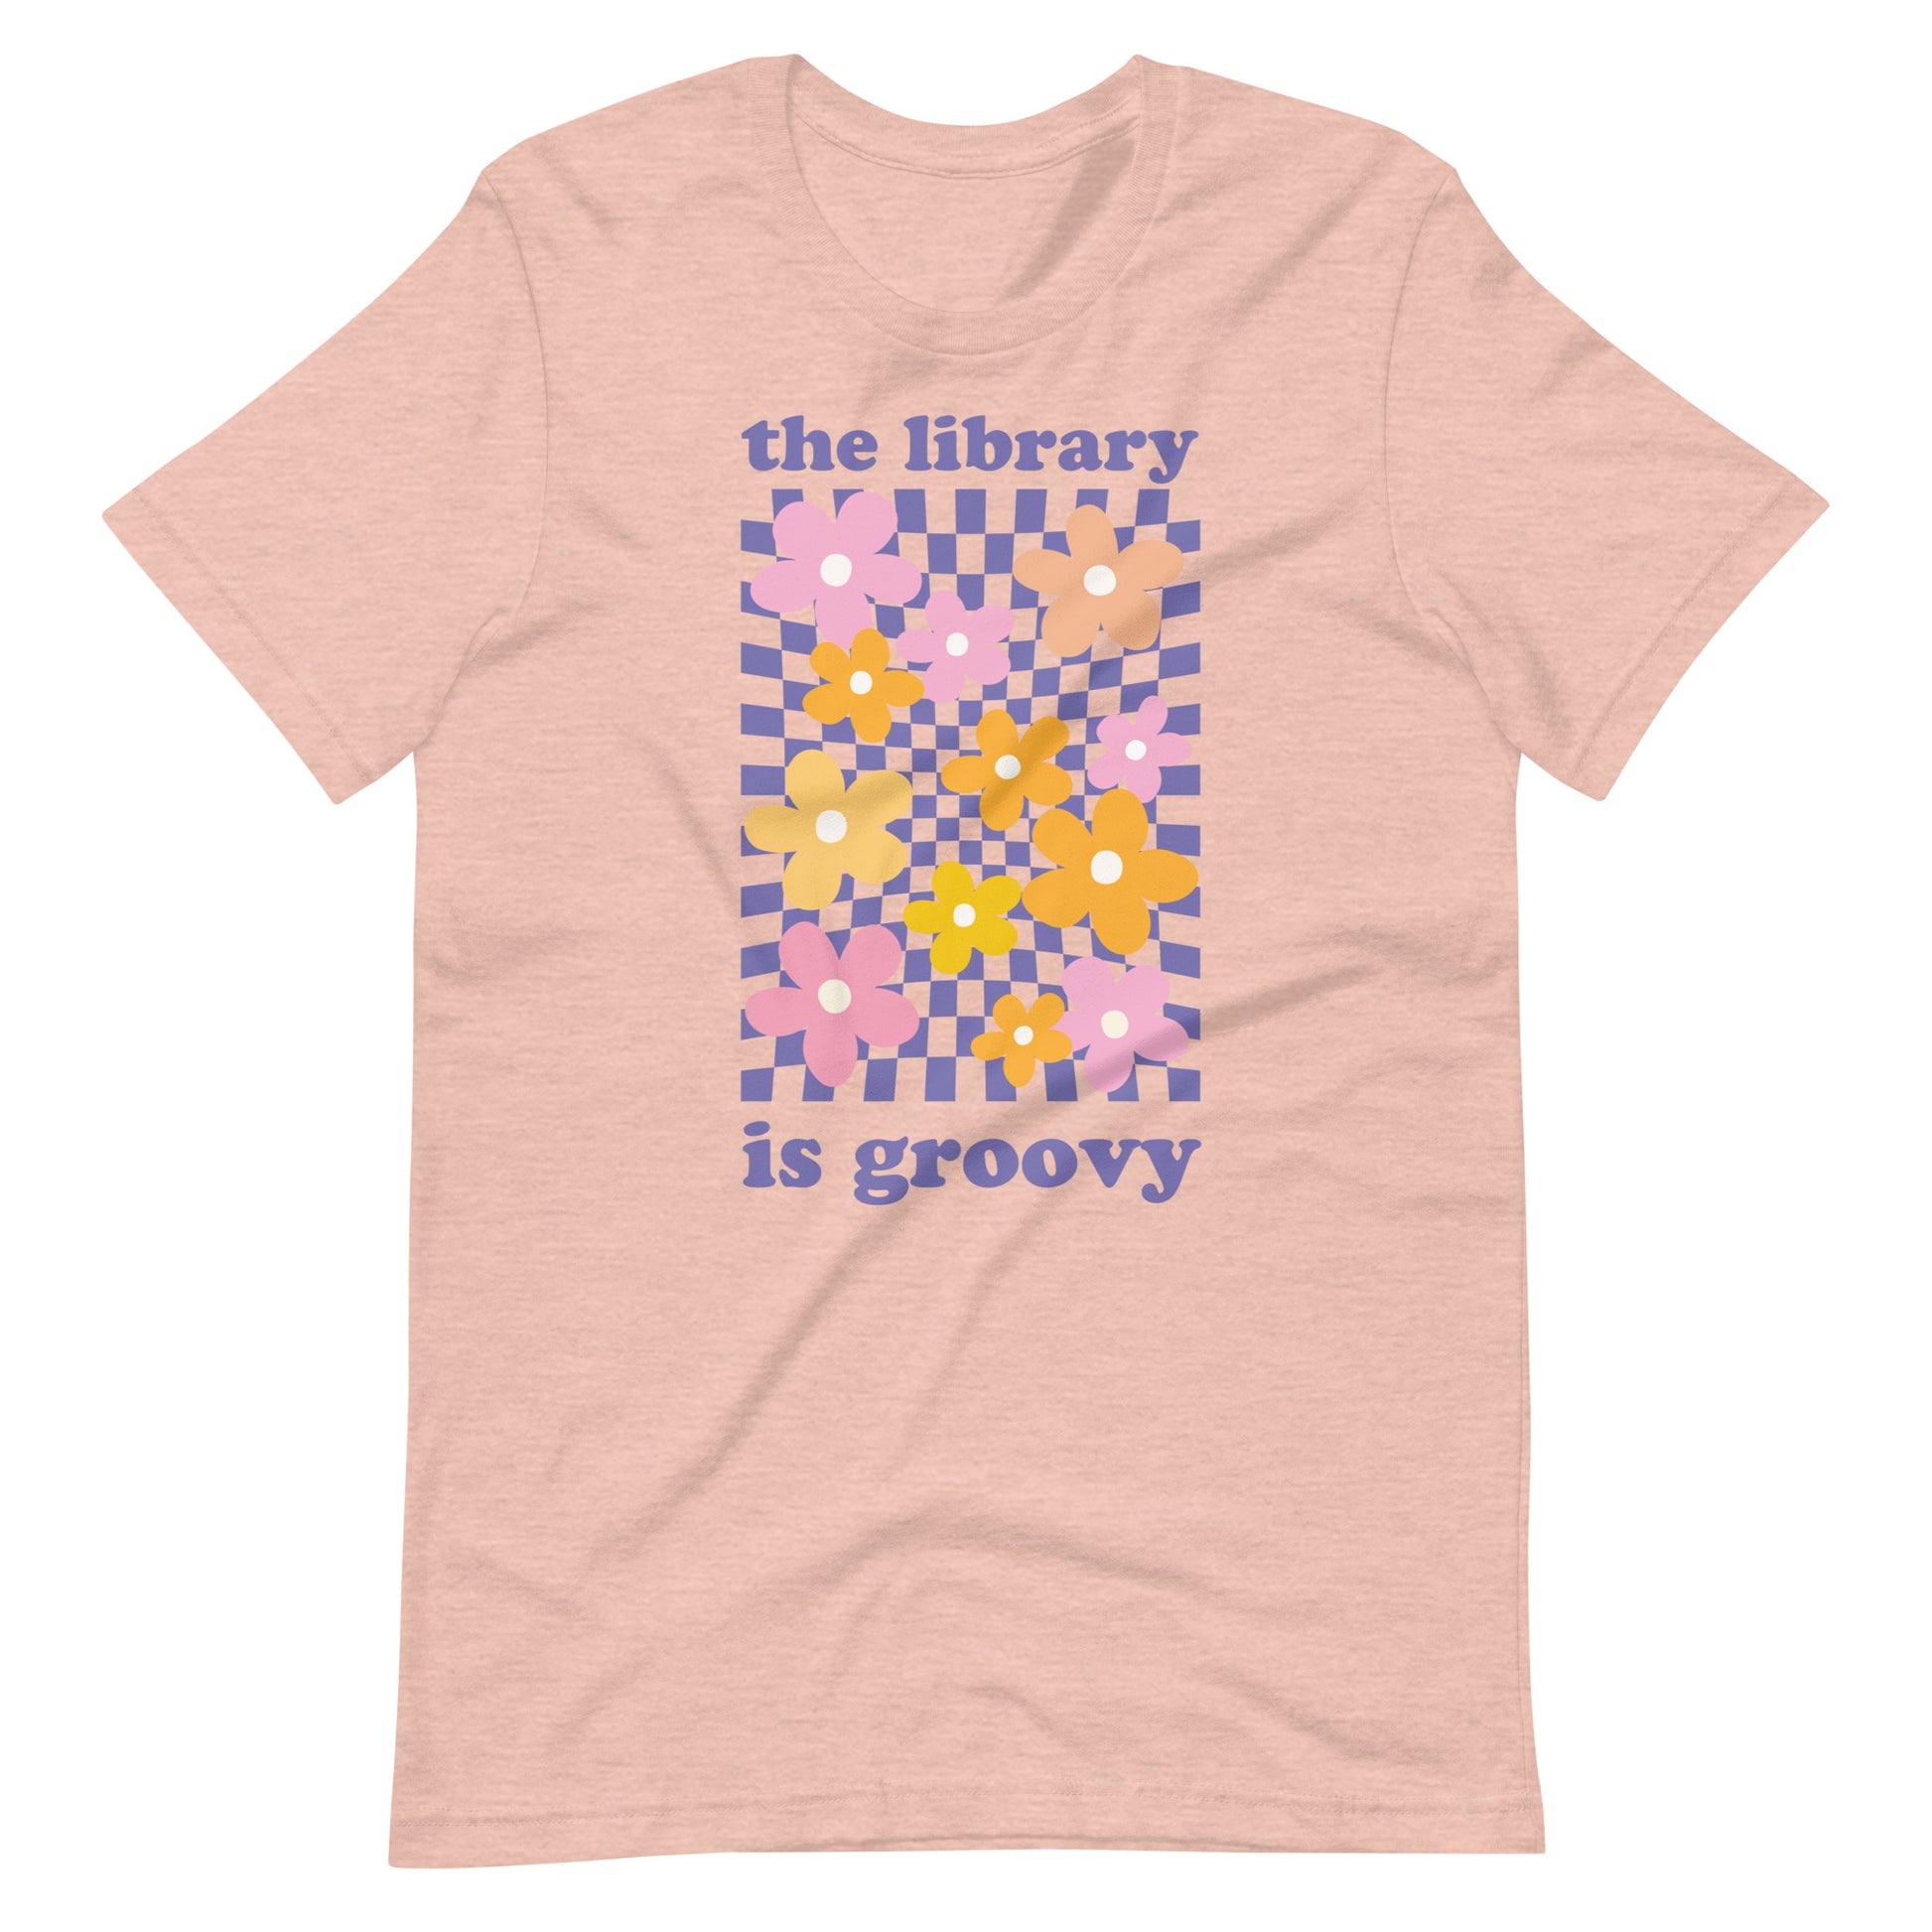 Retro Flowers Librarian T-shirt - Heather Peach